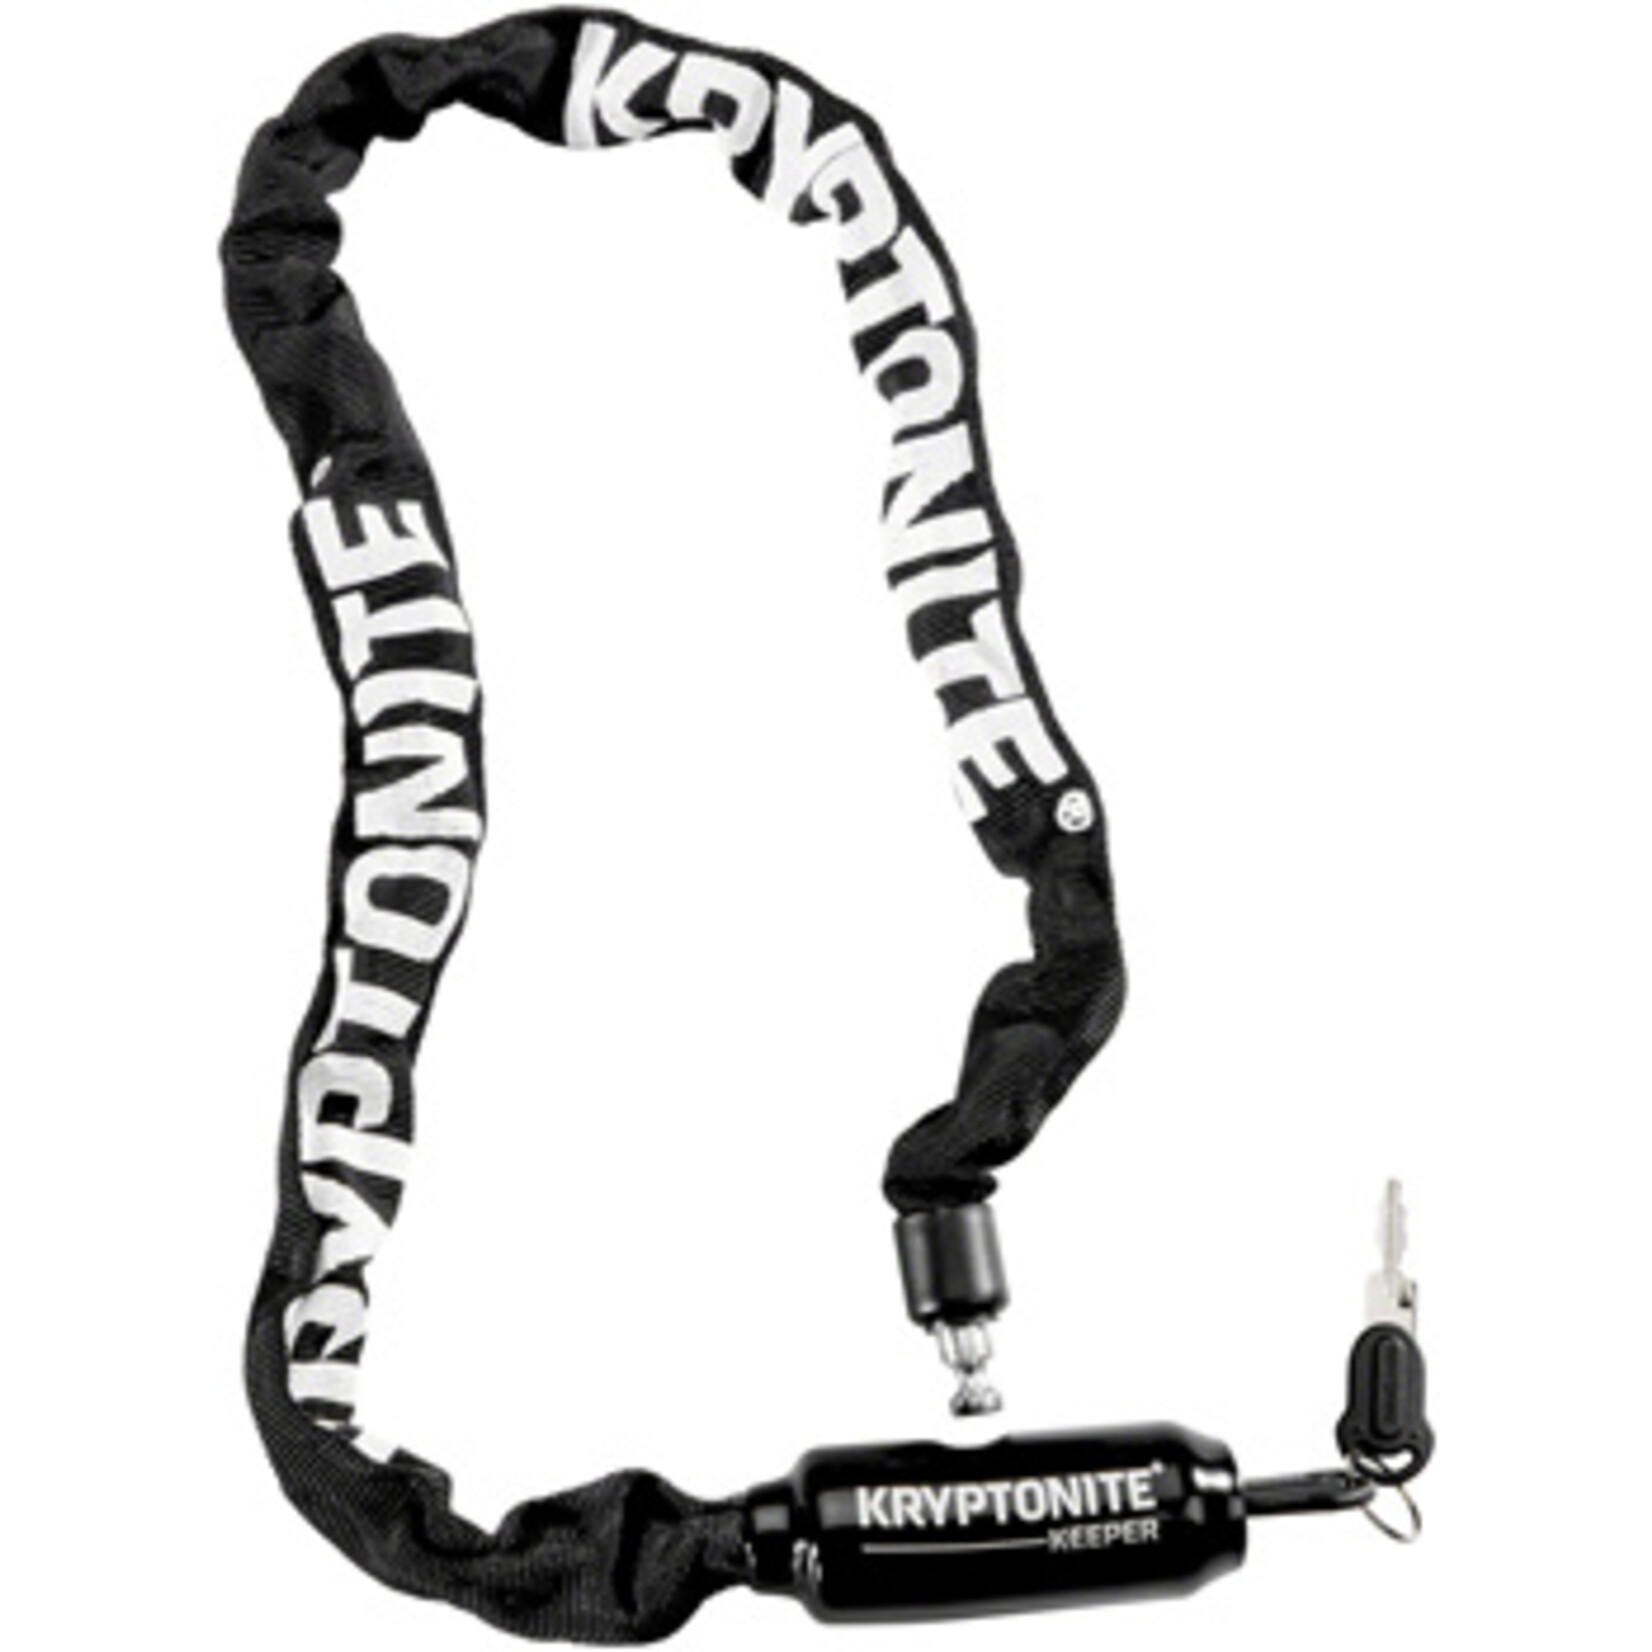 Kryptonite Keeper 585 Integrated Chain Lock - 85cm (2.8'), 5mm, Keyed, Black